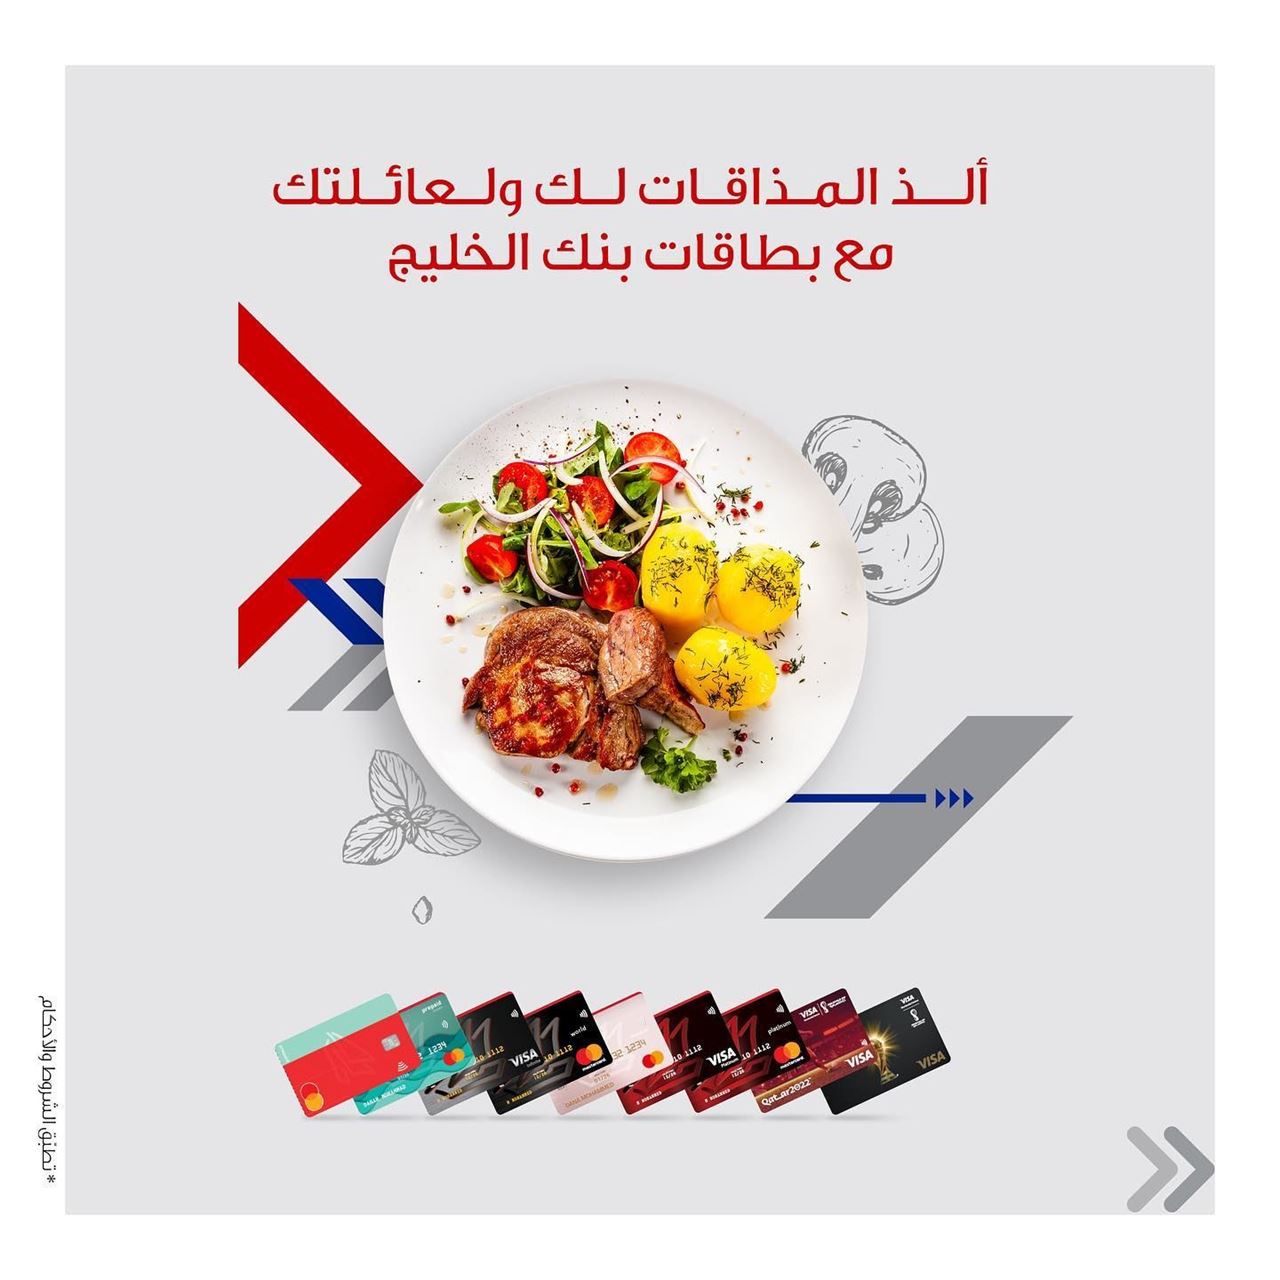 Gulf Bank Credit Card Holders Enjoy Discounts of Up to 15% at Alshaya Restaurants